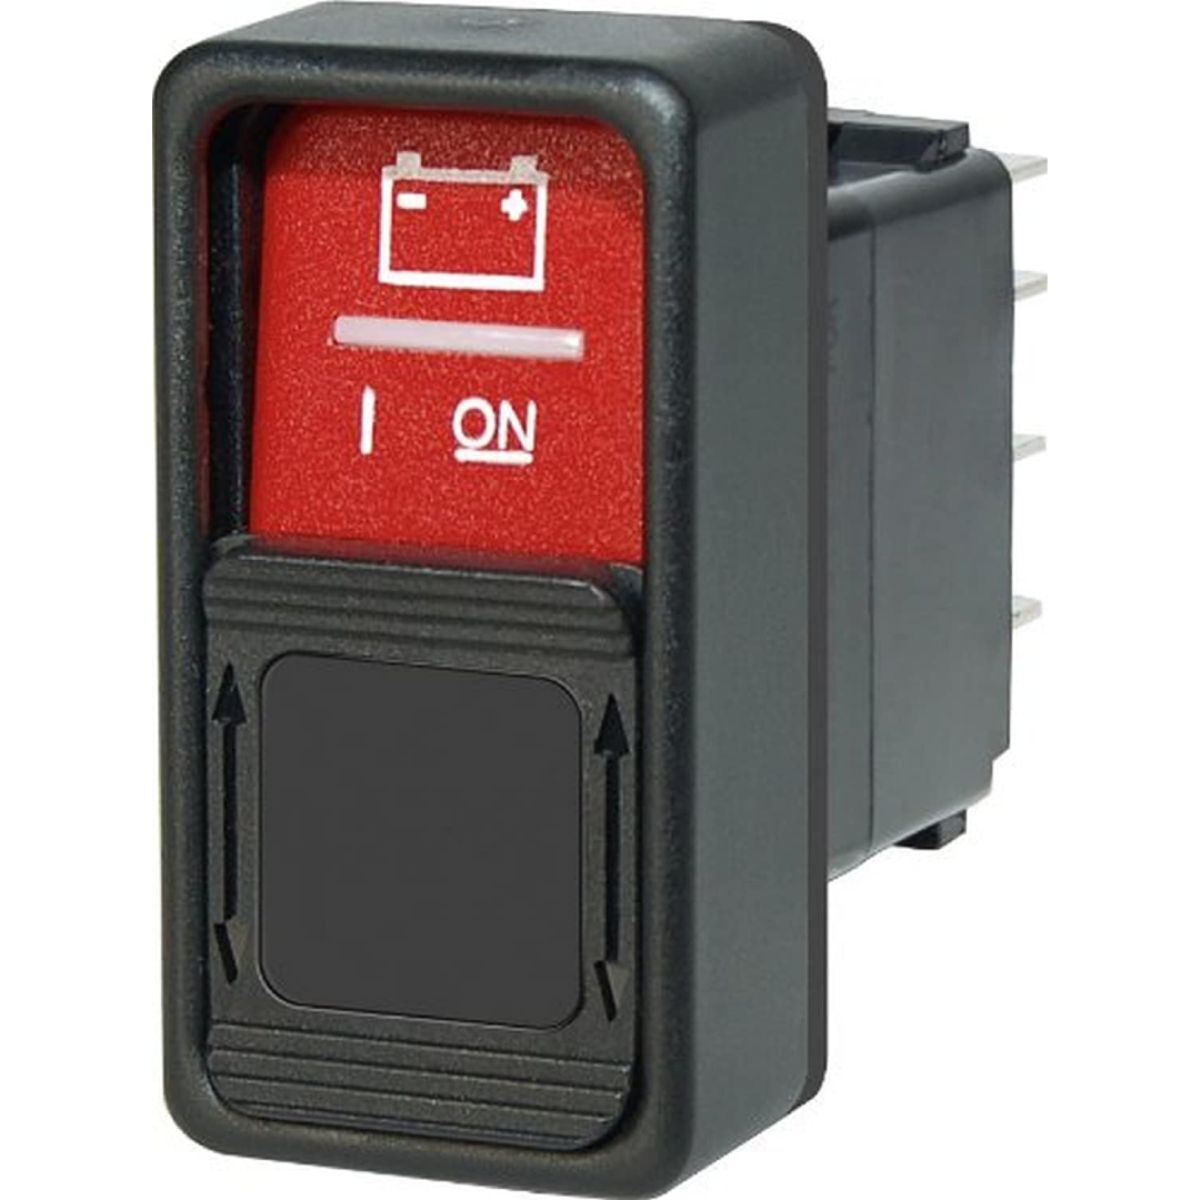 Remote Control contura switch connector plug (safteyhub 250)